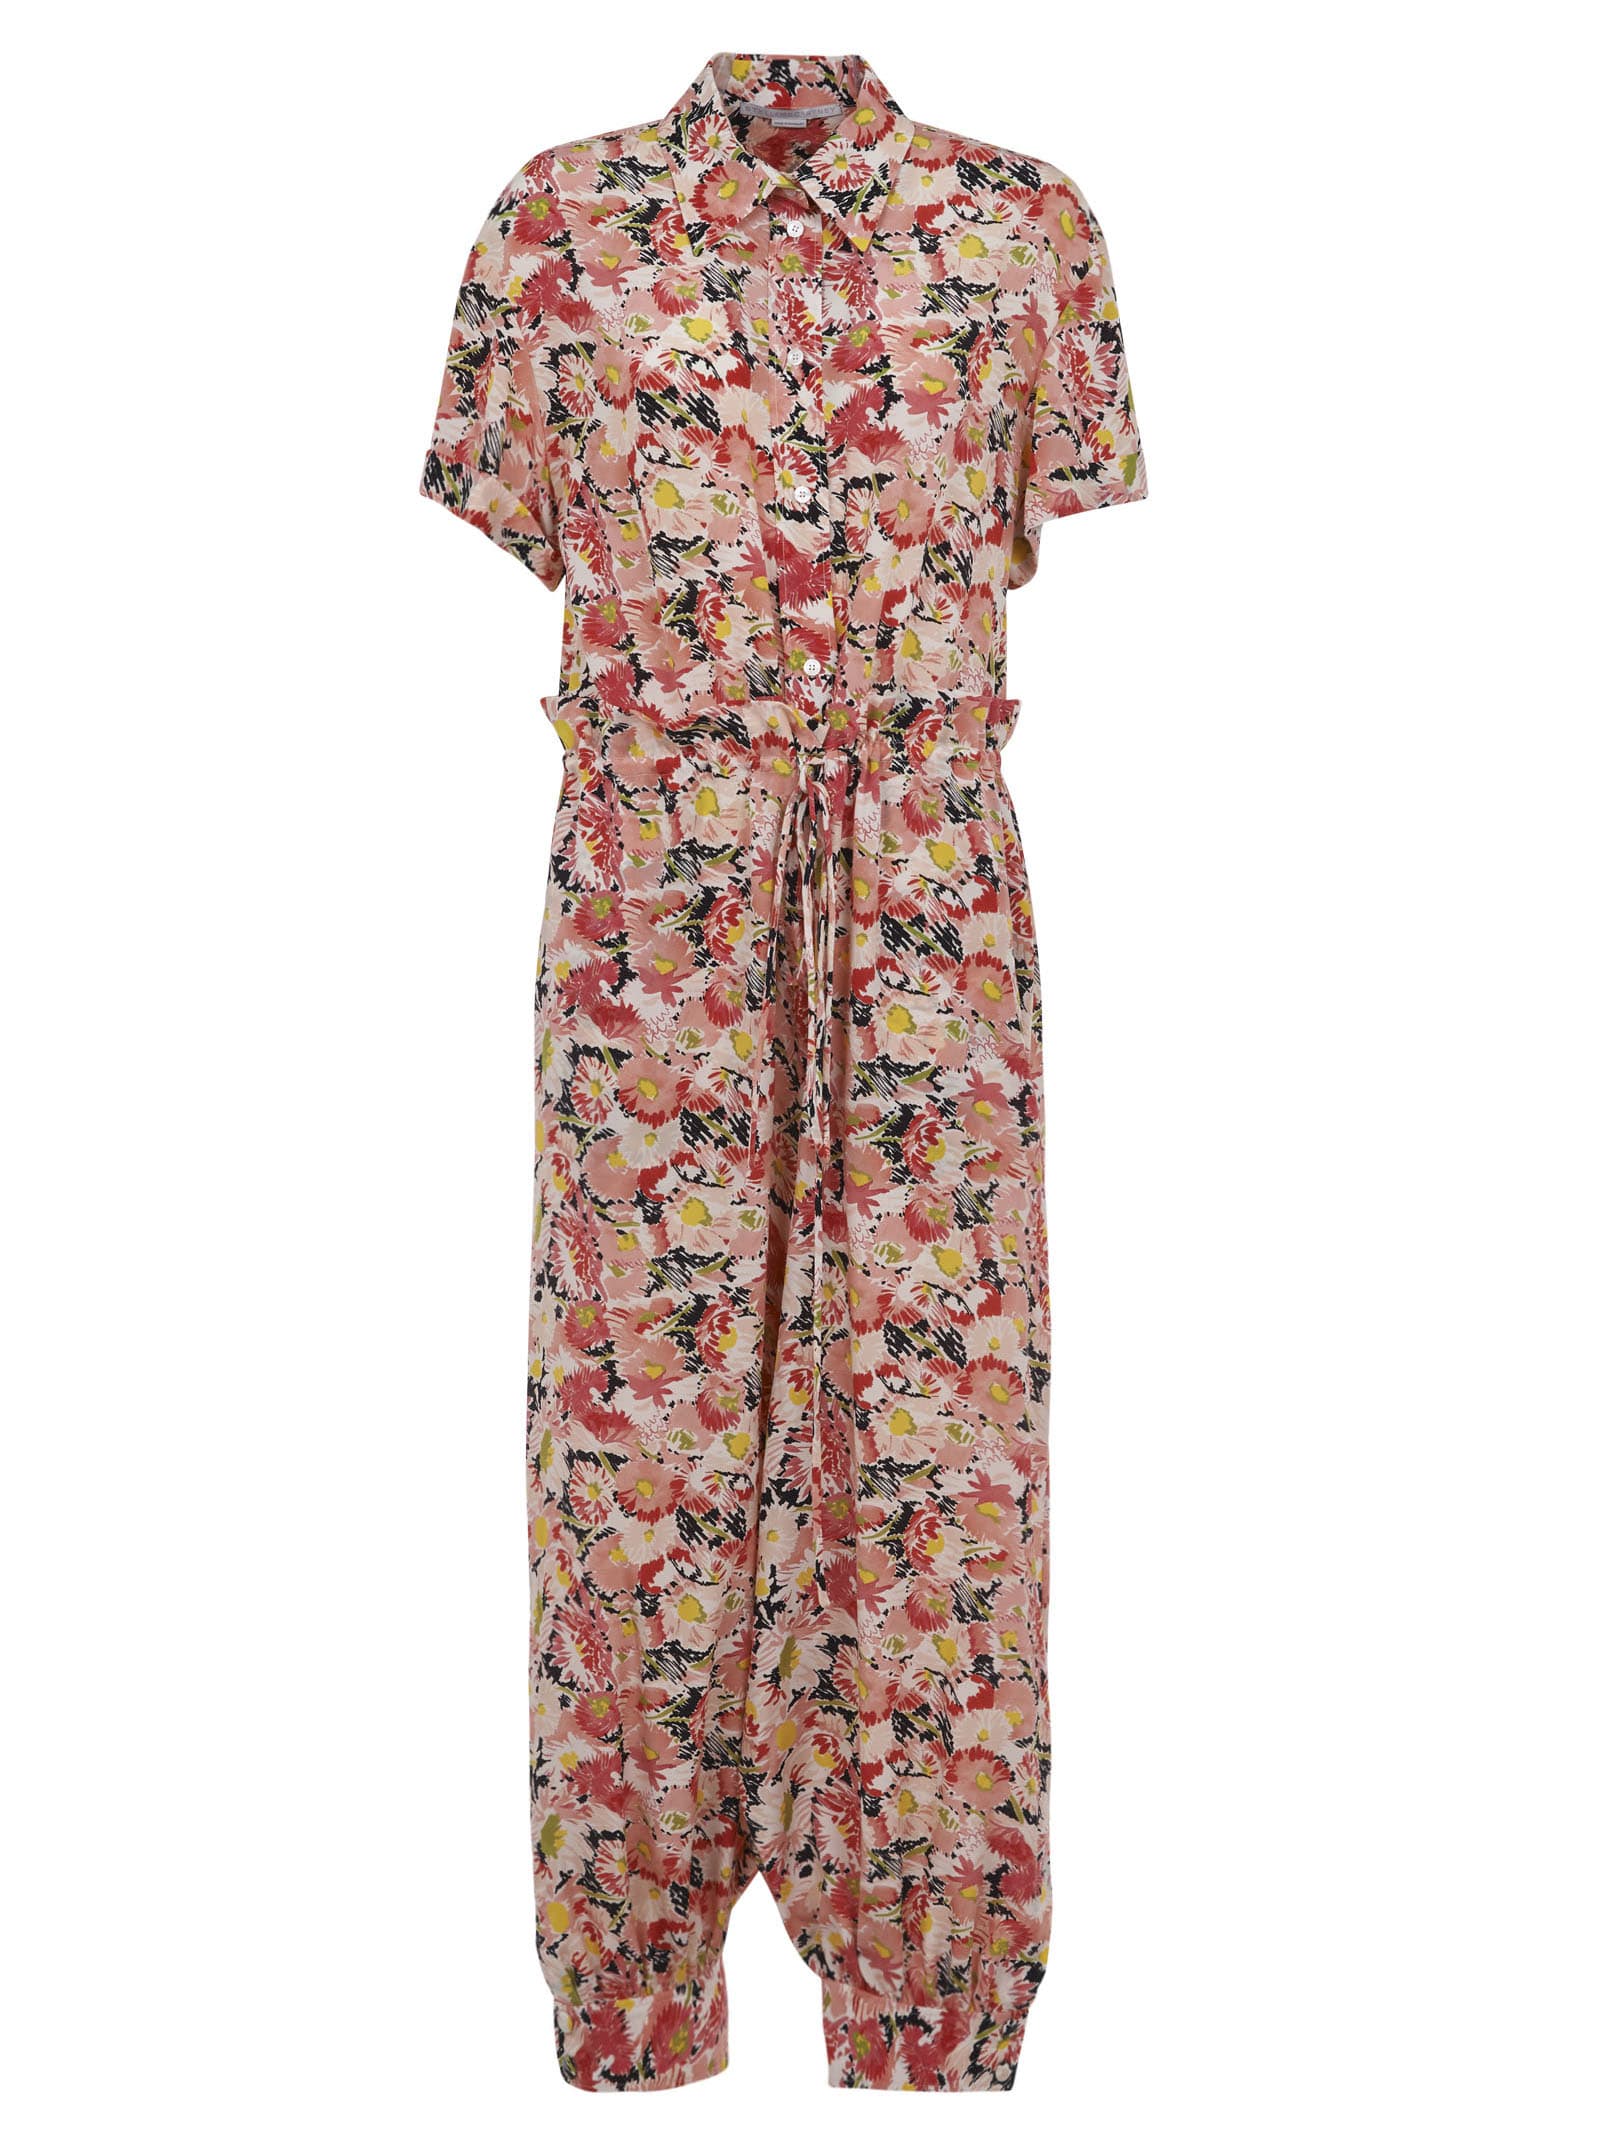 Stella McCartney Floral Print Jumpsuit